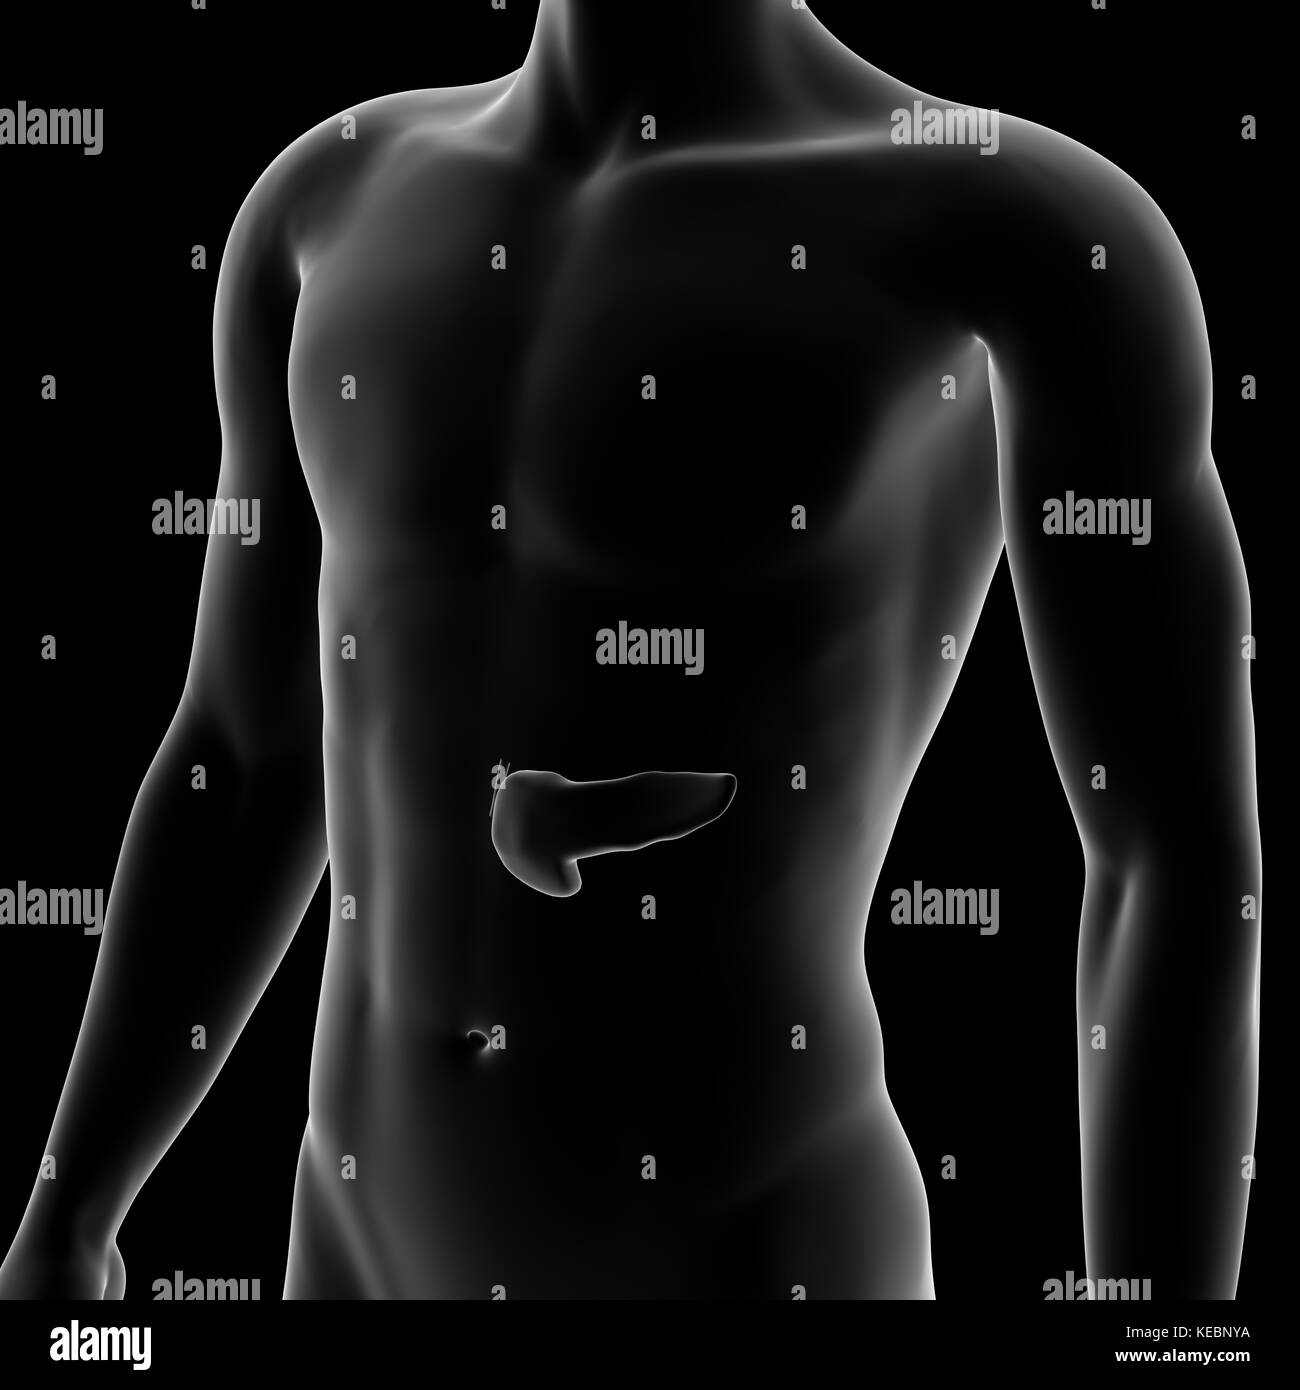 Pancreas, Internal Organ, Human Body Stock Photo